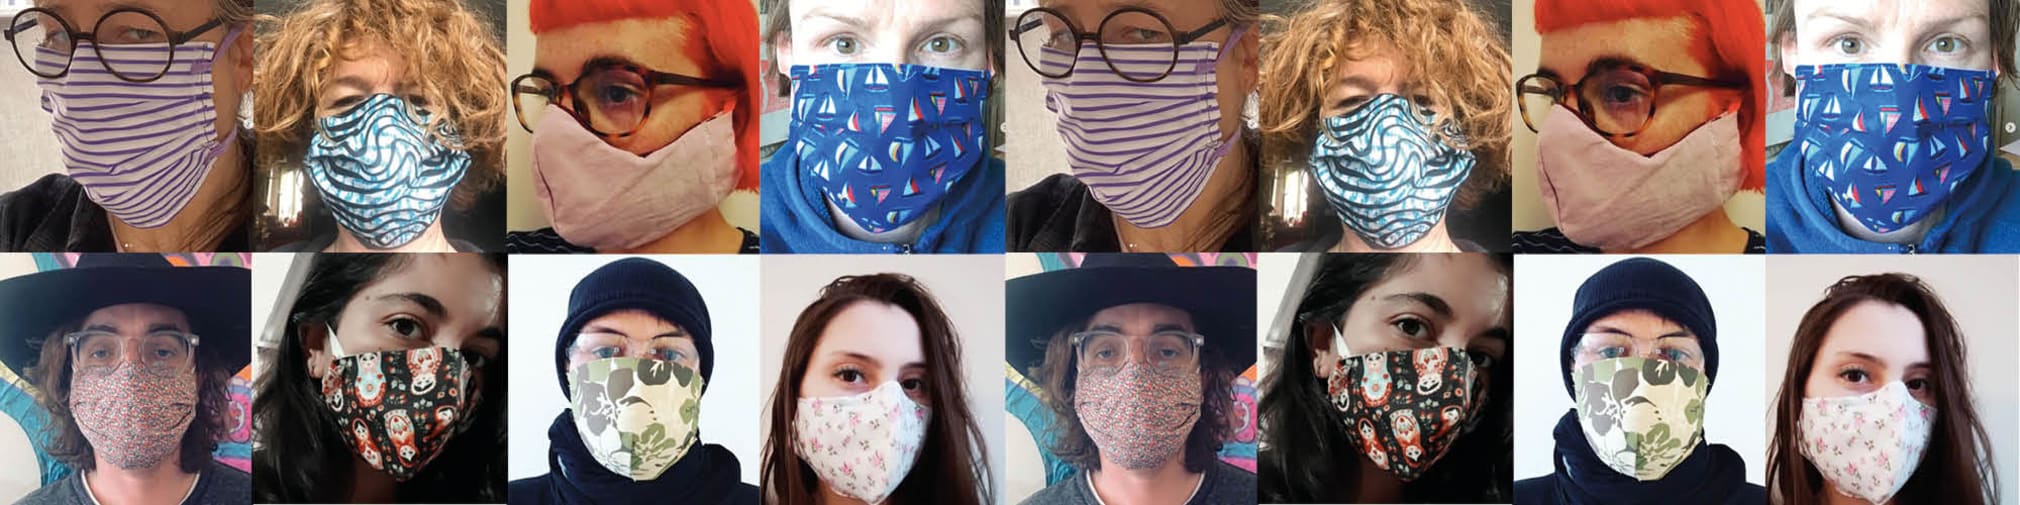 Peoples Masks Sewing Challenge